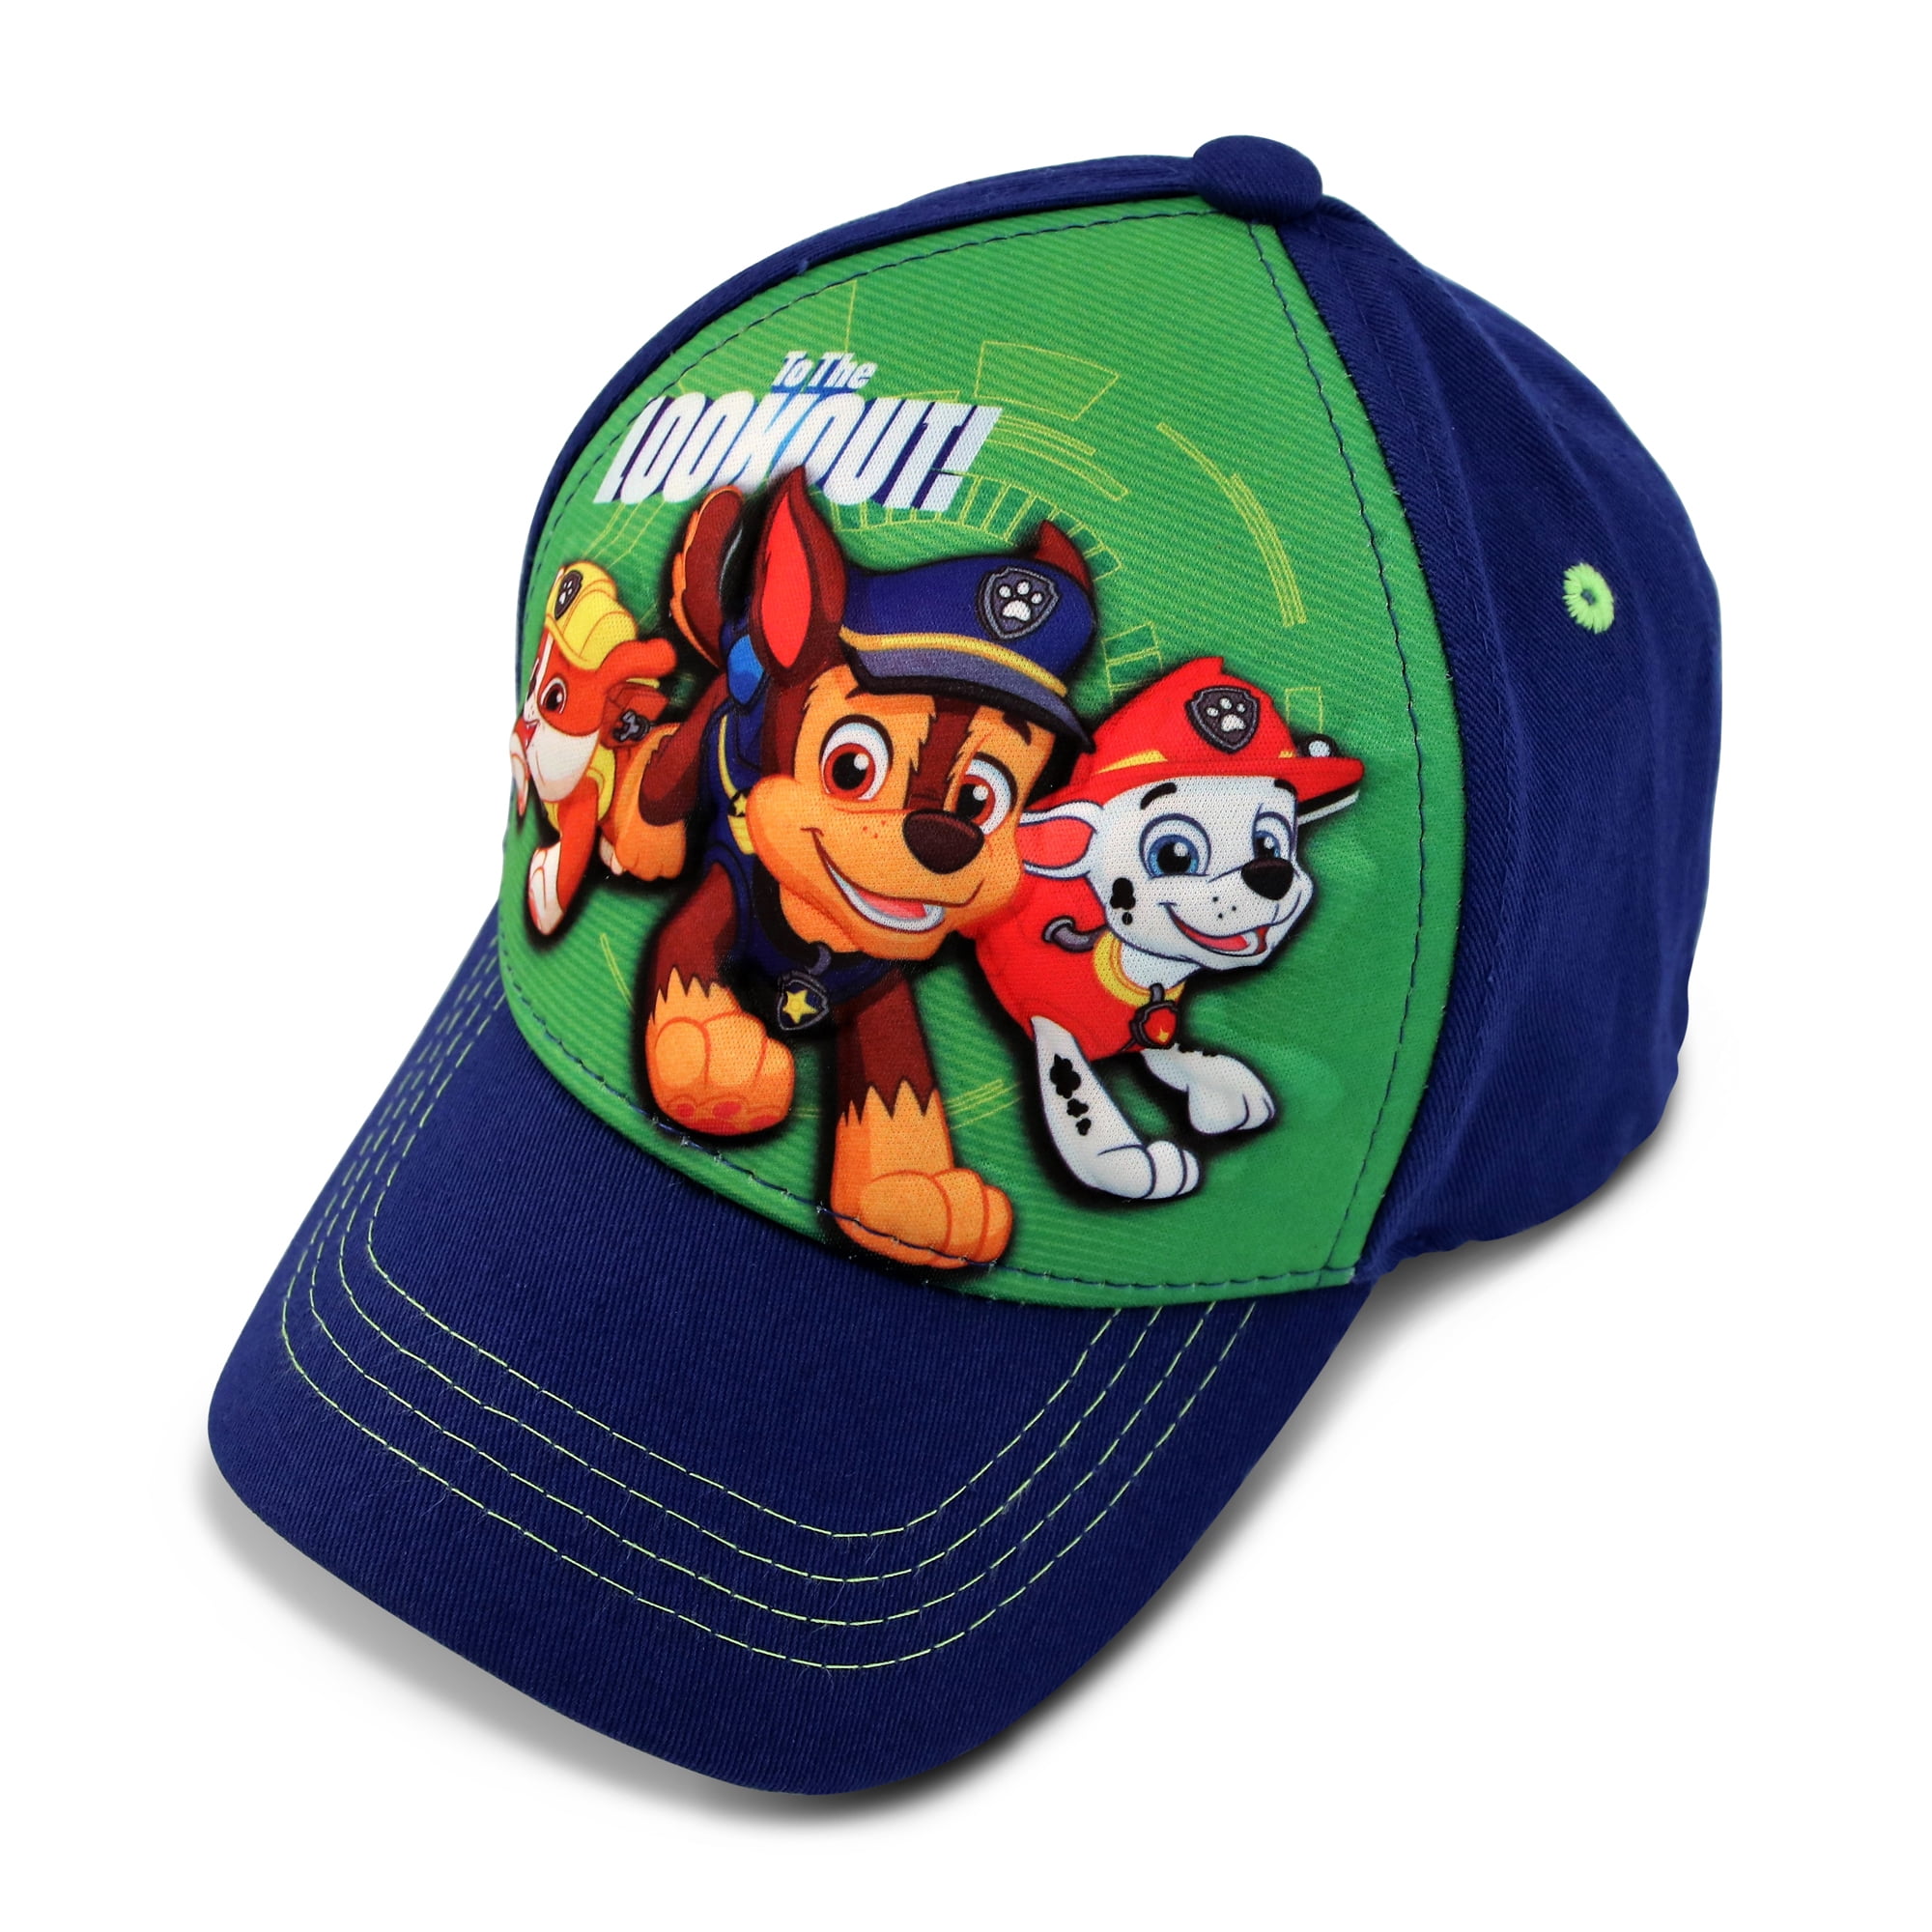 Paw Patrol Kids Baseball Cap for Boys Ages 2-7 Baseball Cap Nickelodeon Boys Toddler Hat